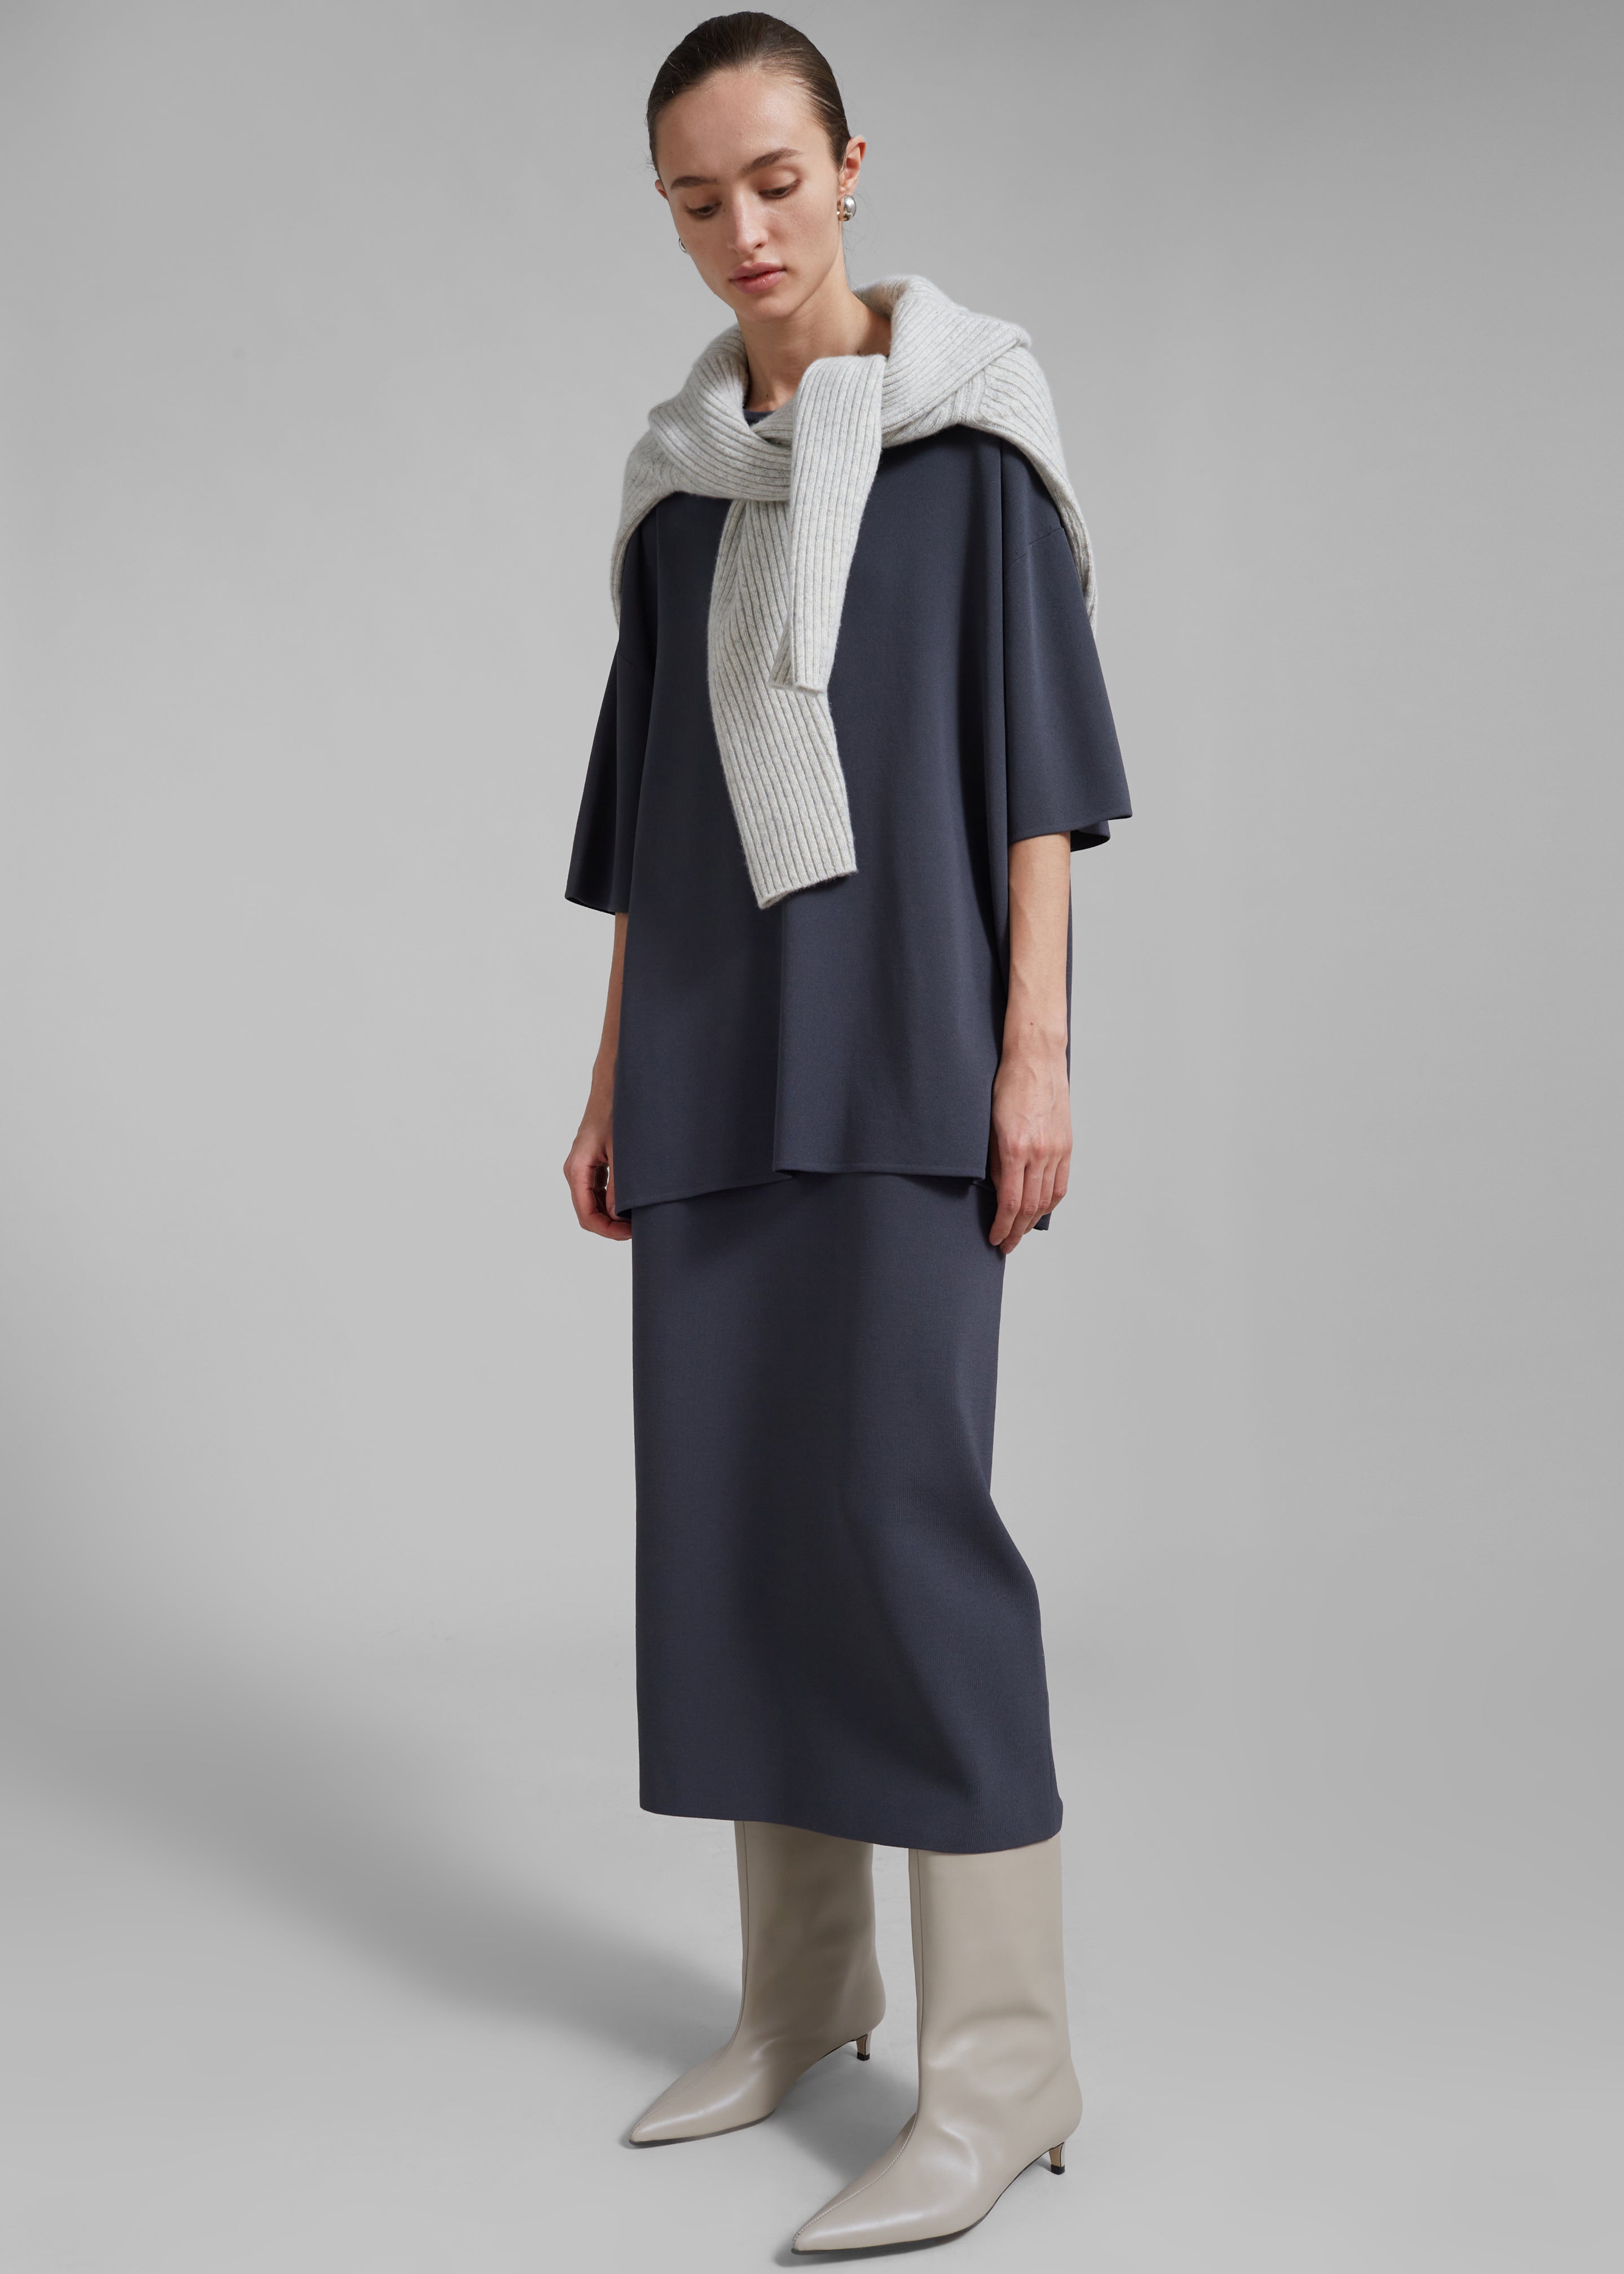 Solange Knit Pencil Skirt - Grey - 9